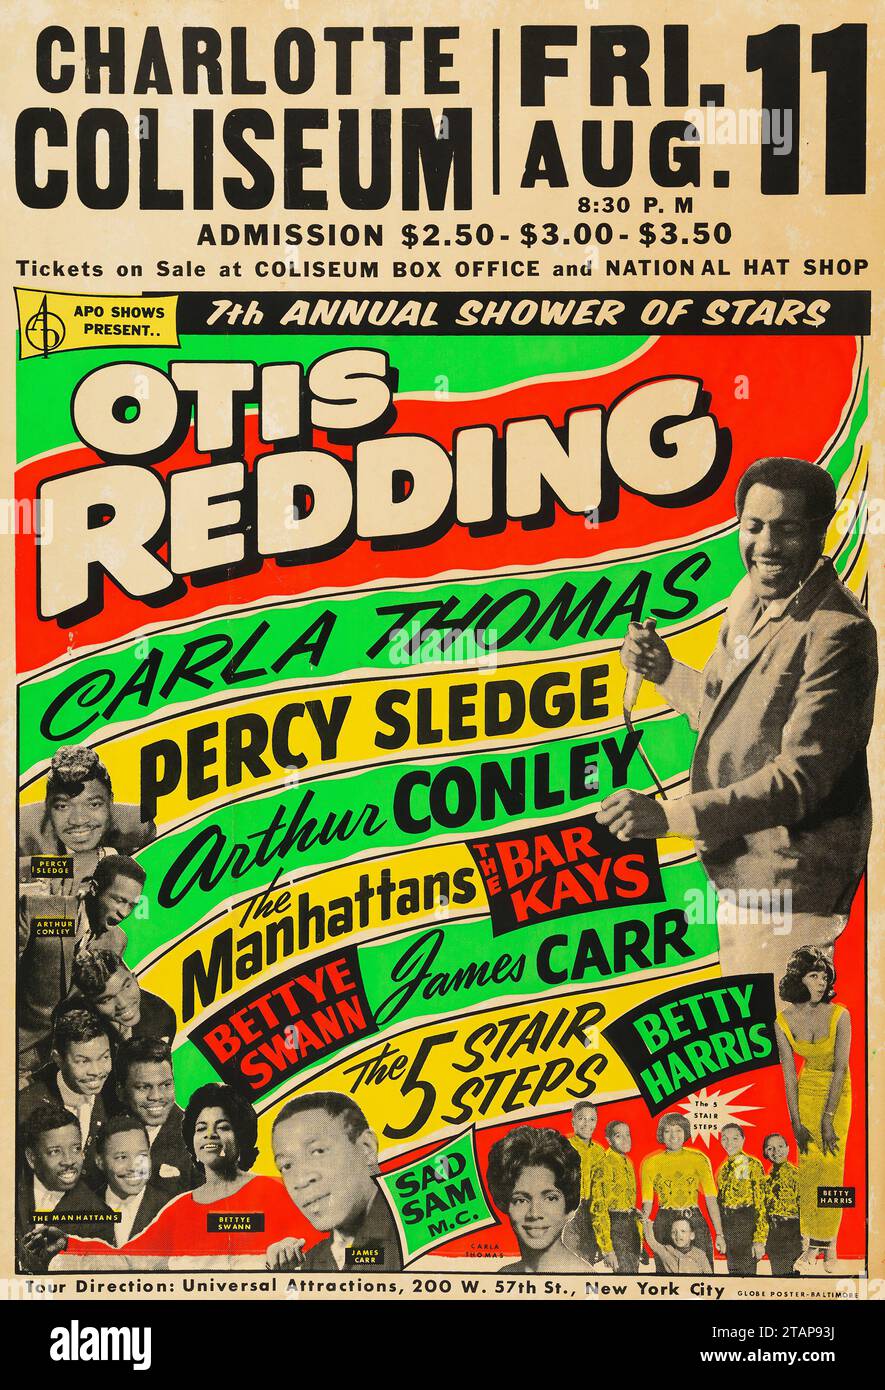 Otis Redding Charlotte Coliseum Concert Poster (APO Shows Present, 11. August 1967) Carla Thomas, Percy Sledge, Arthur Conley, Die Manhattans, James Carr, 5 Treppenstufen Stockfoto